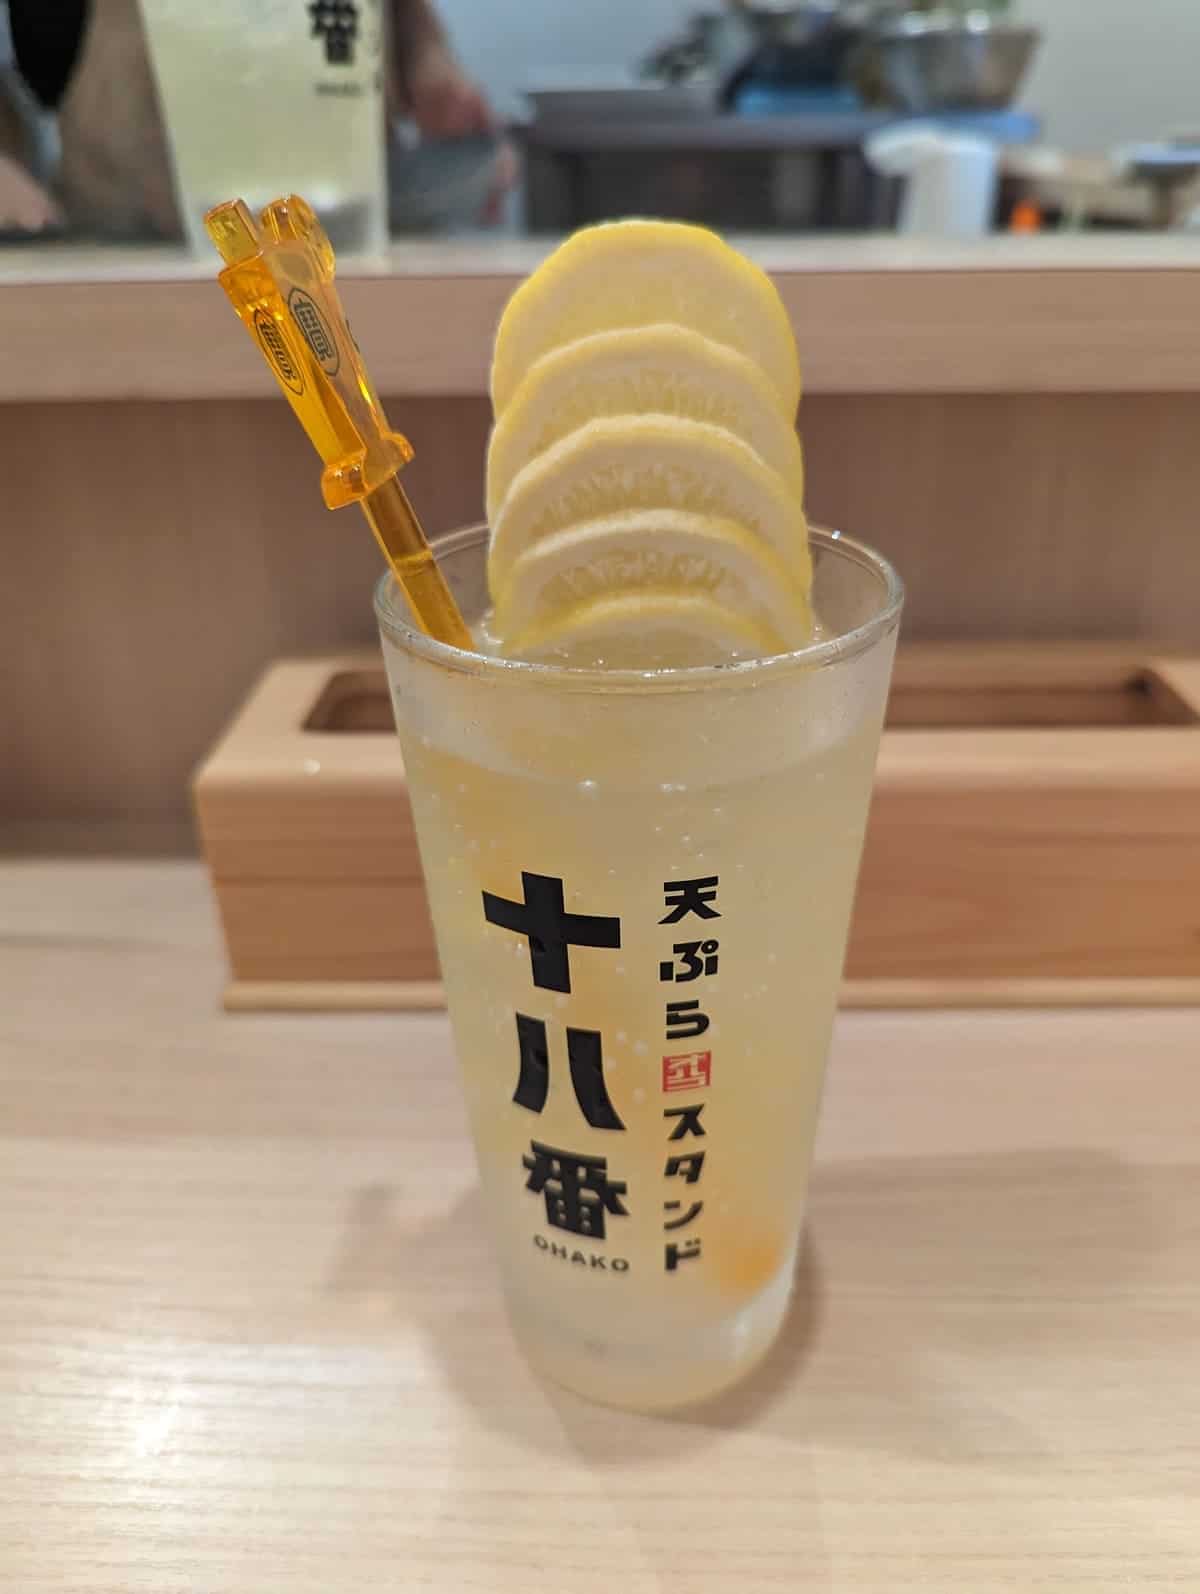 kanazawa ohako lemon sour